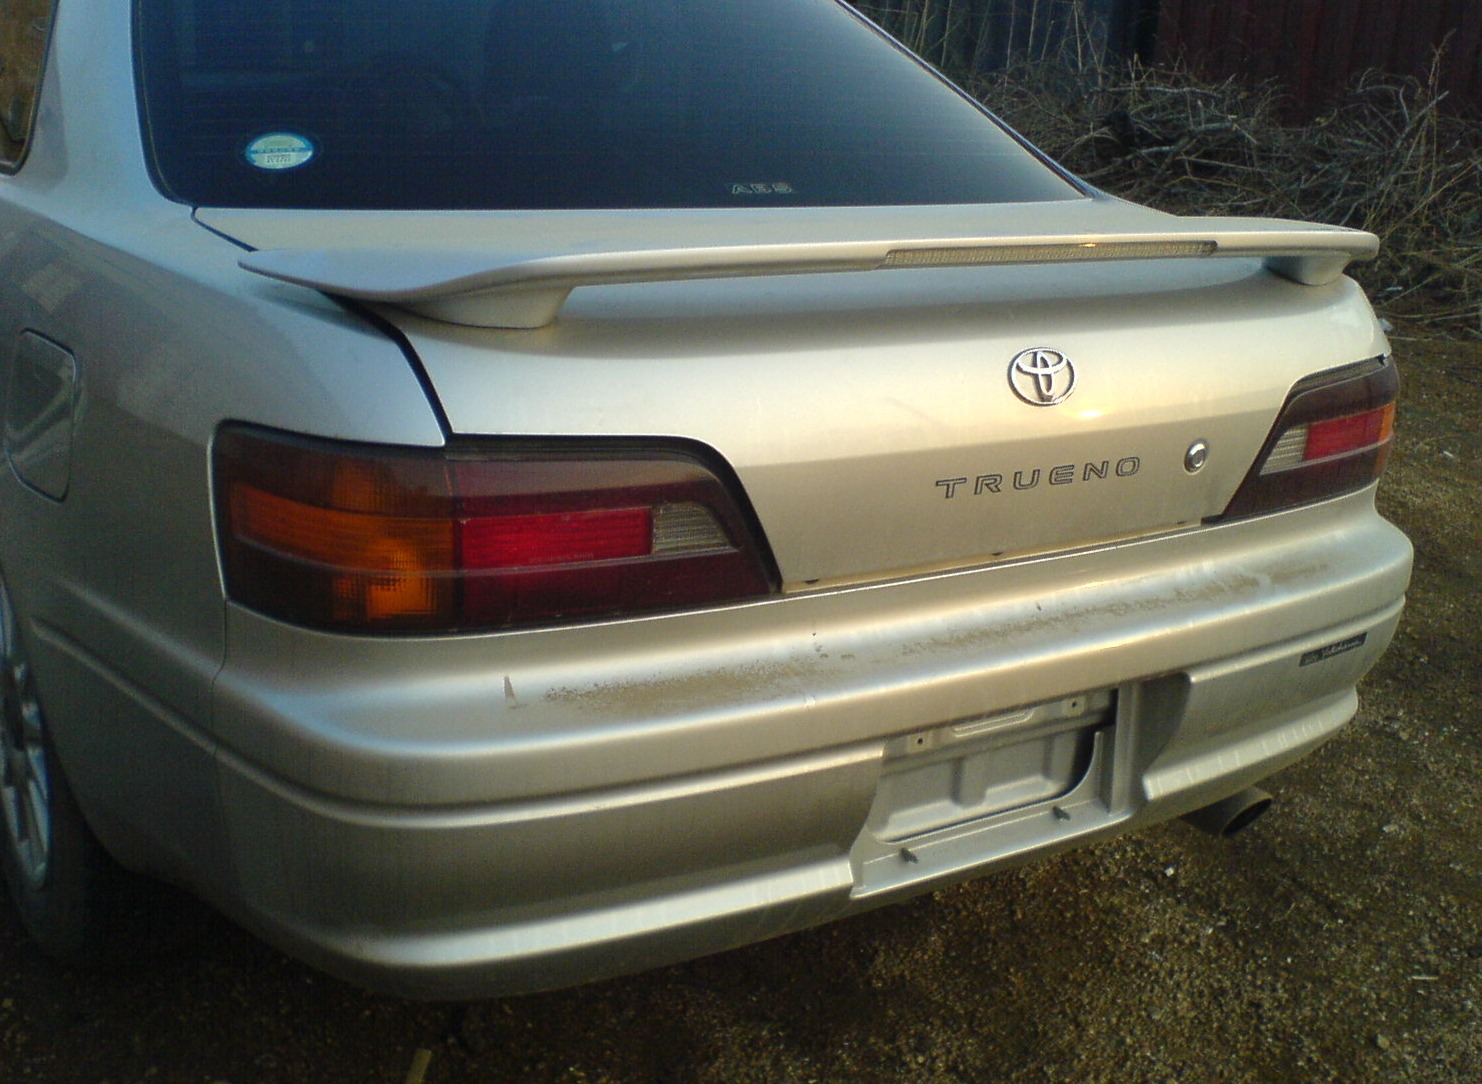    Toyota Sprinter Trueno 16 1997